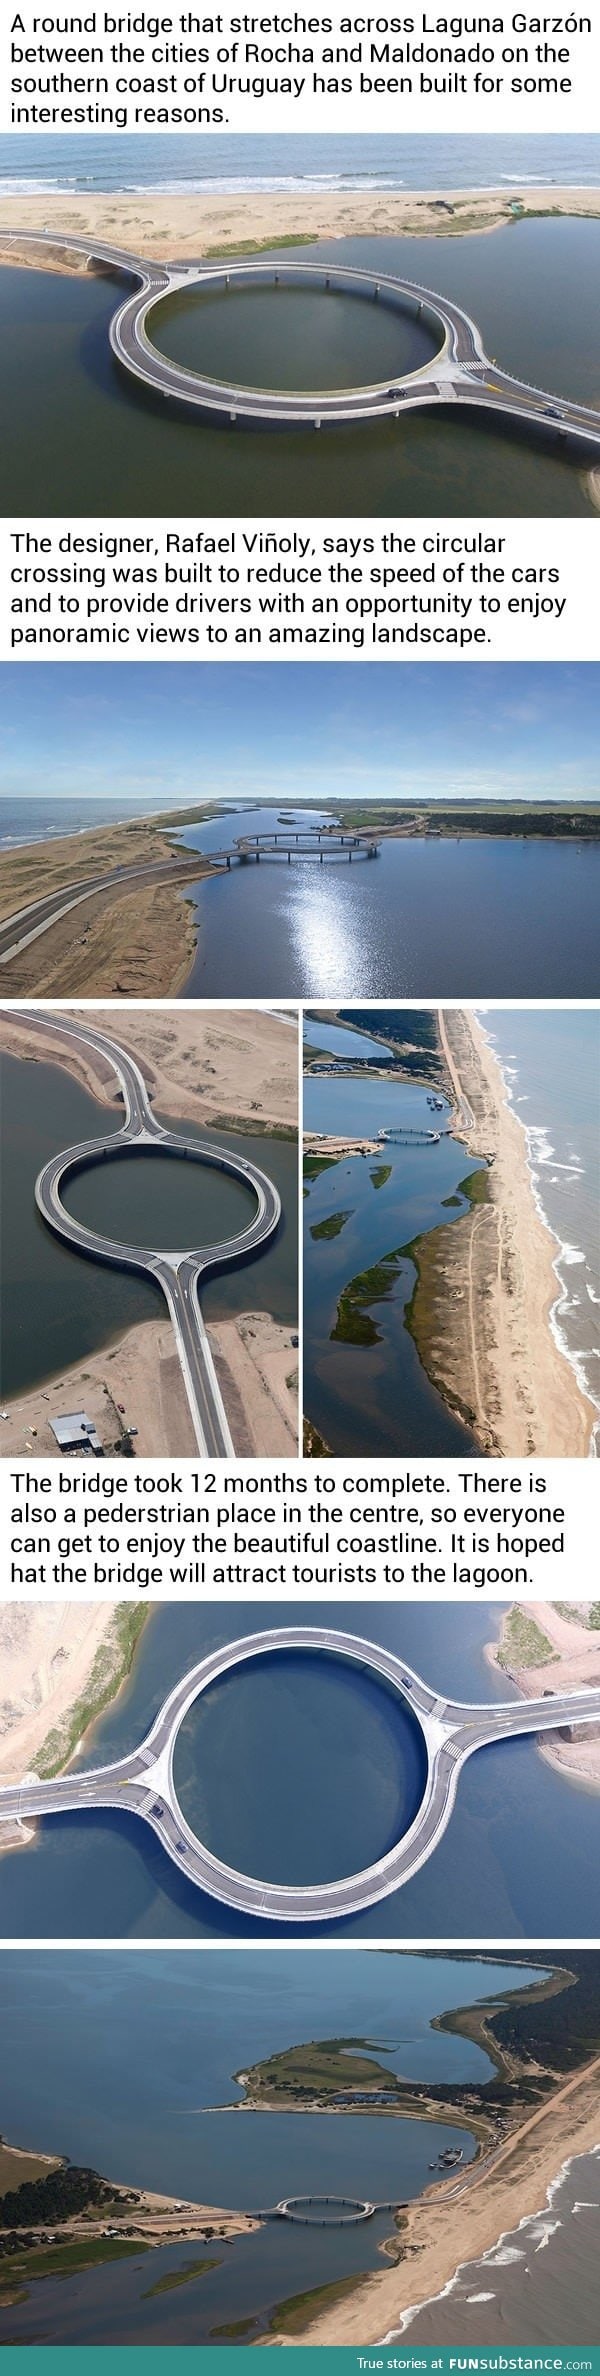 A new circular bridge in Uruguay was built for interesting reasons